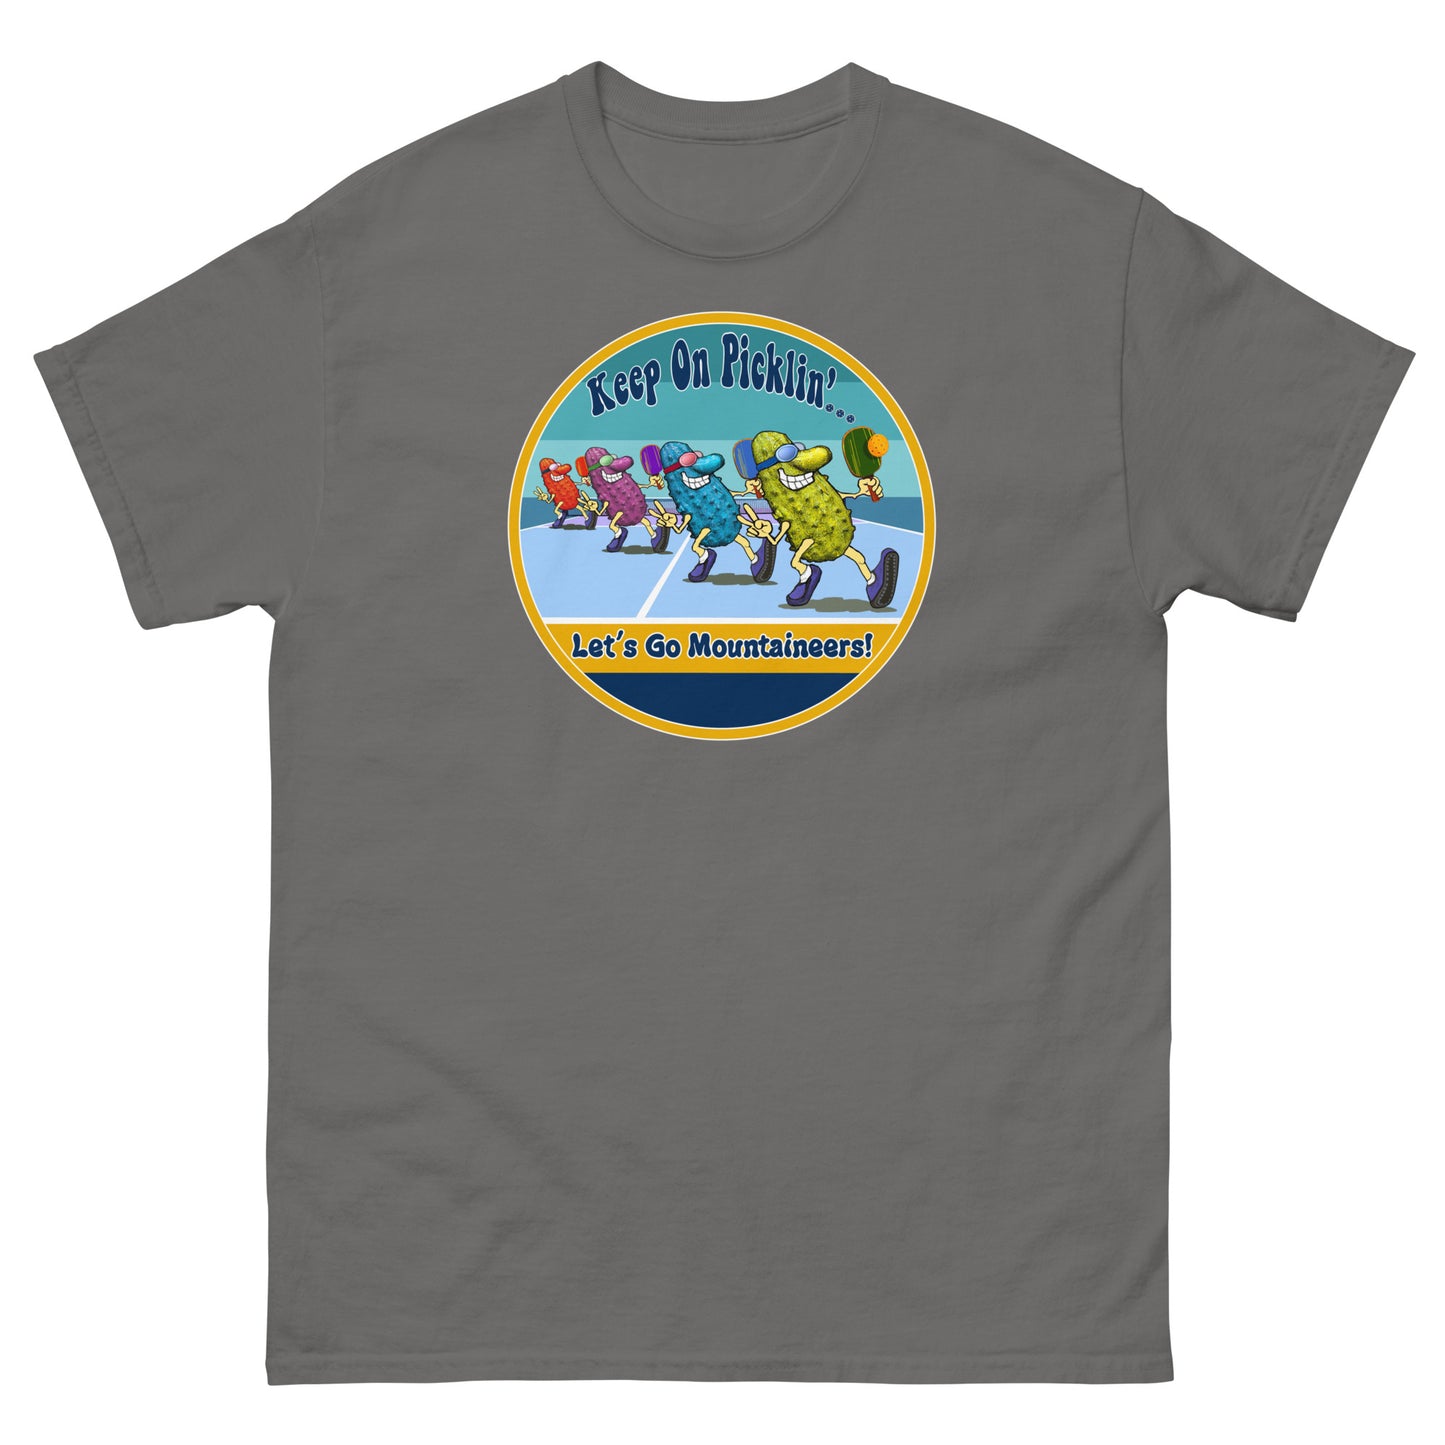 West Virginia Mountaineers Pickleball Shirt, Short-sleeve Tee, Retro Stripes Graphic